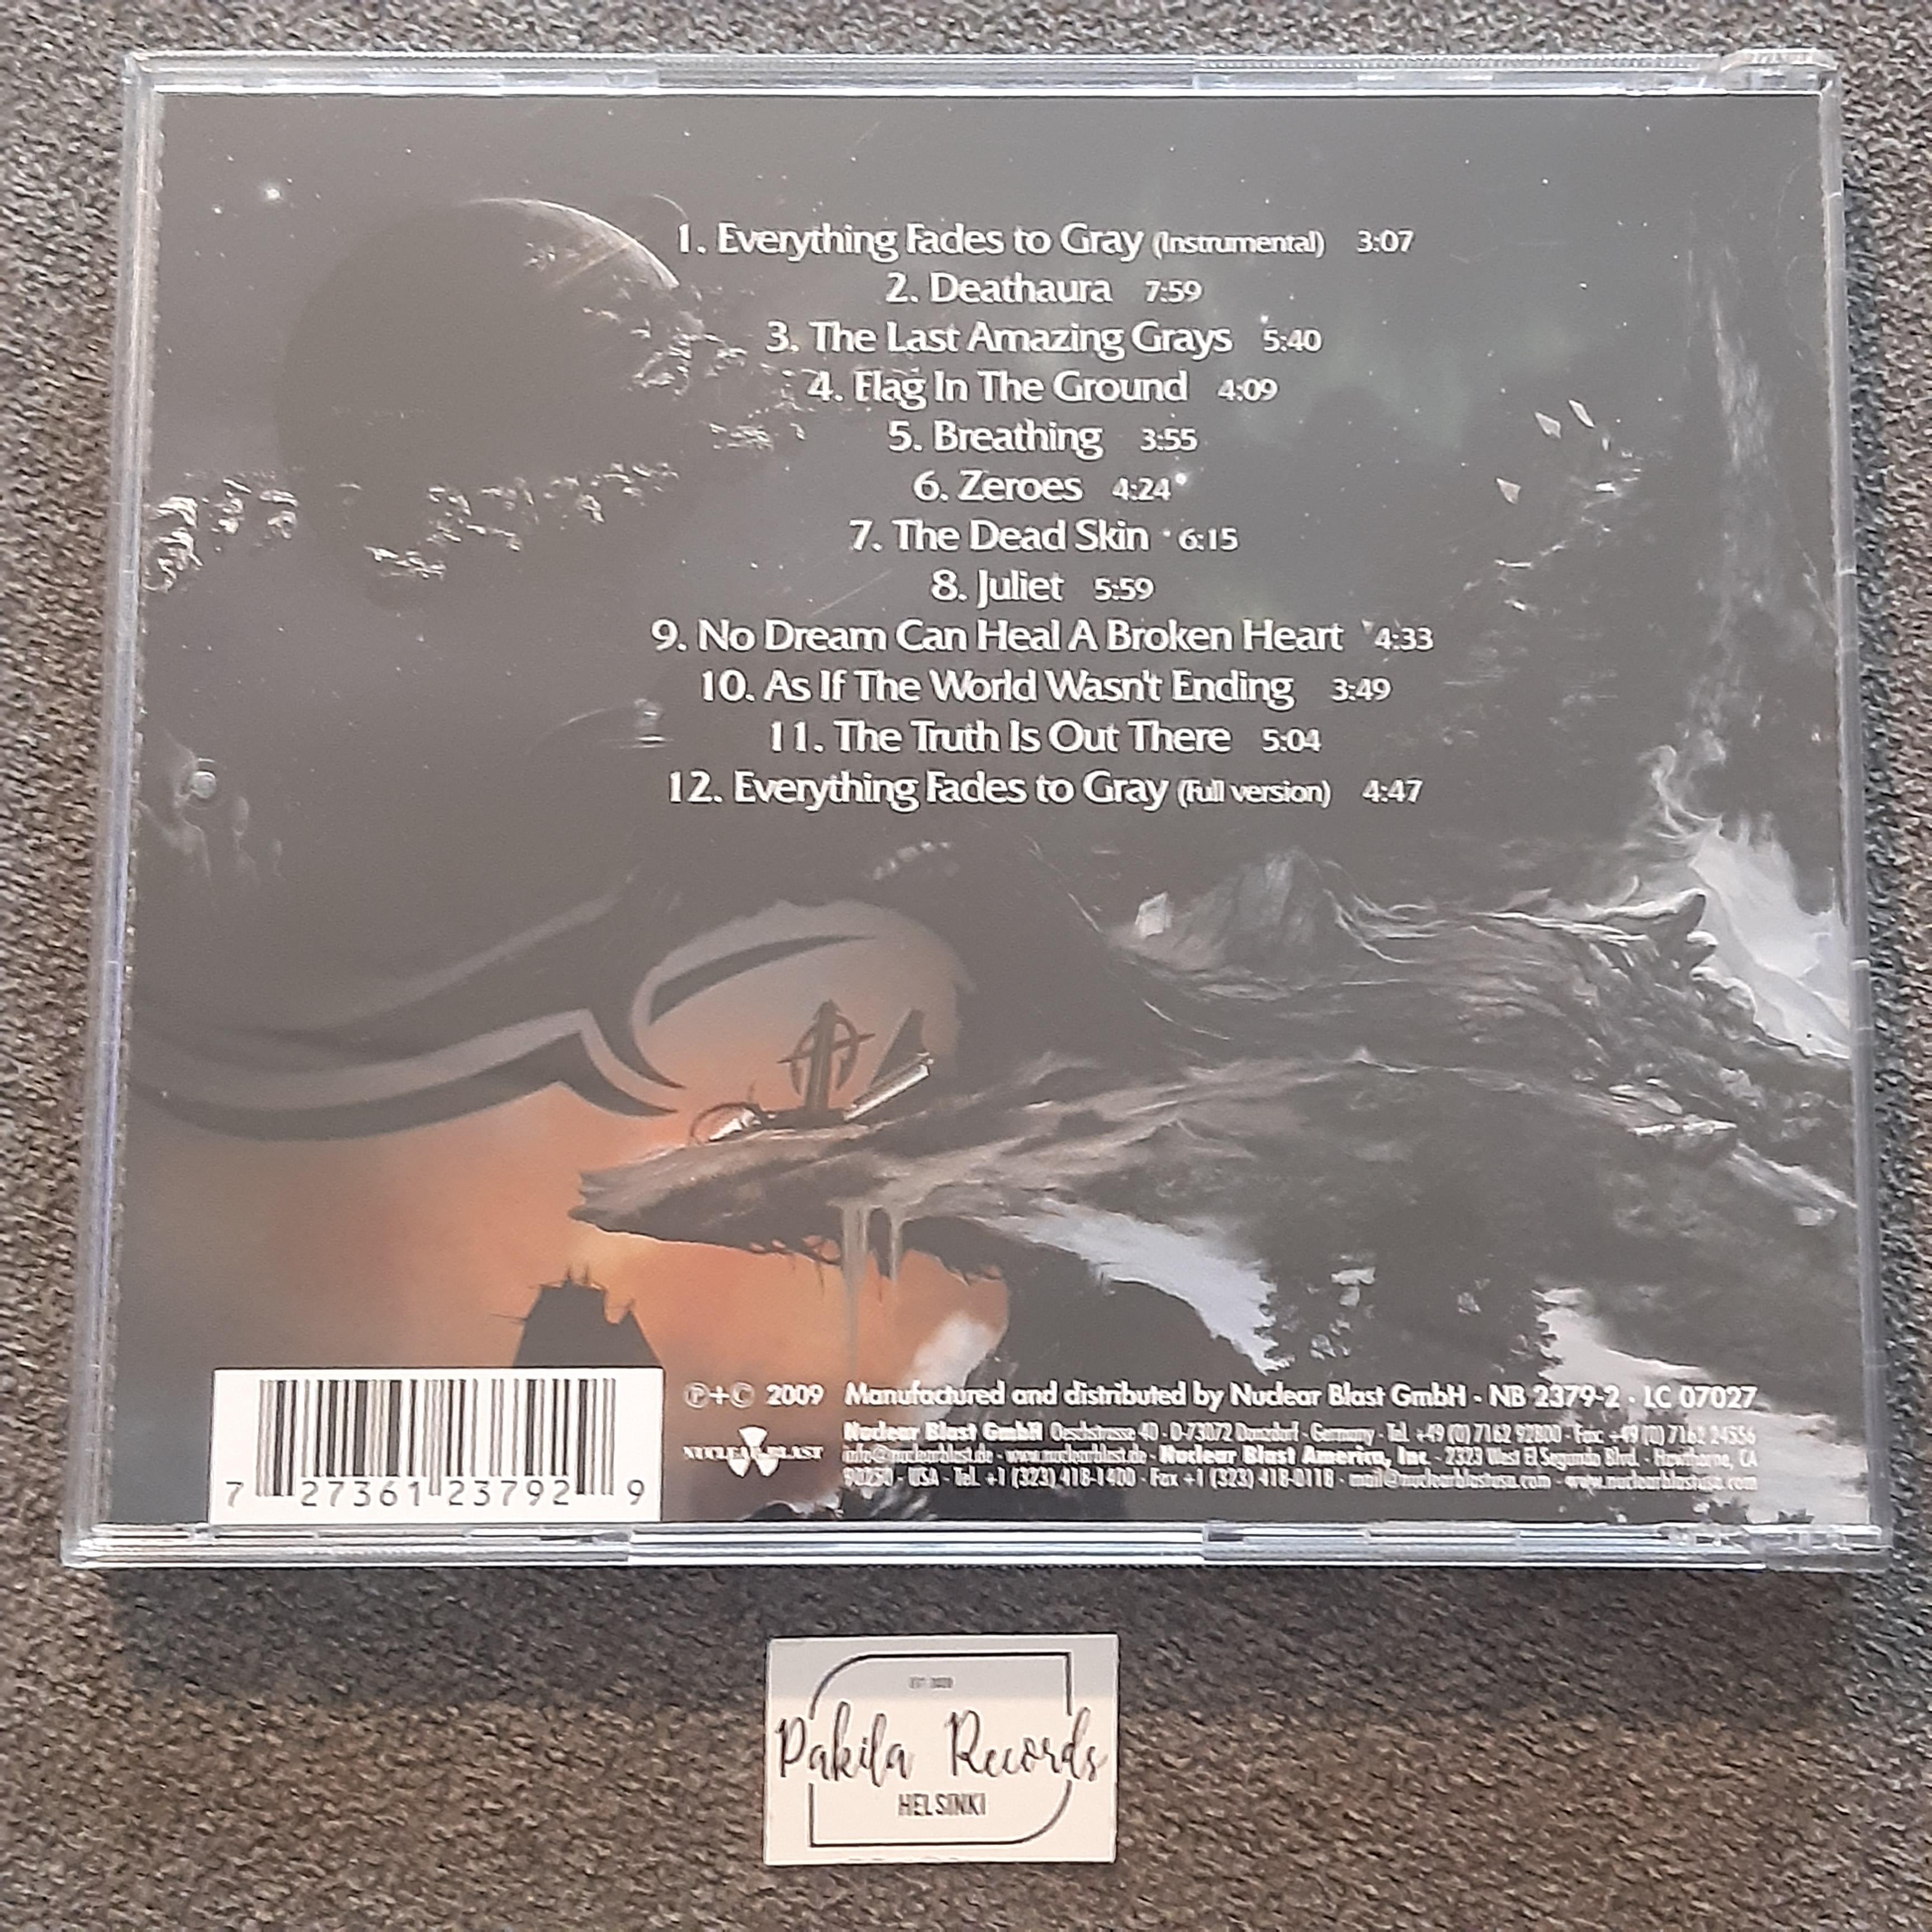 Sonata Arctica - The Days Of Grays - CD (käytetty)